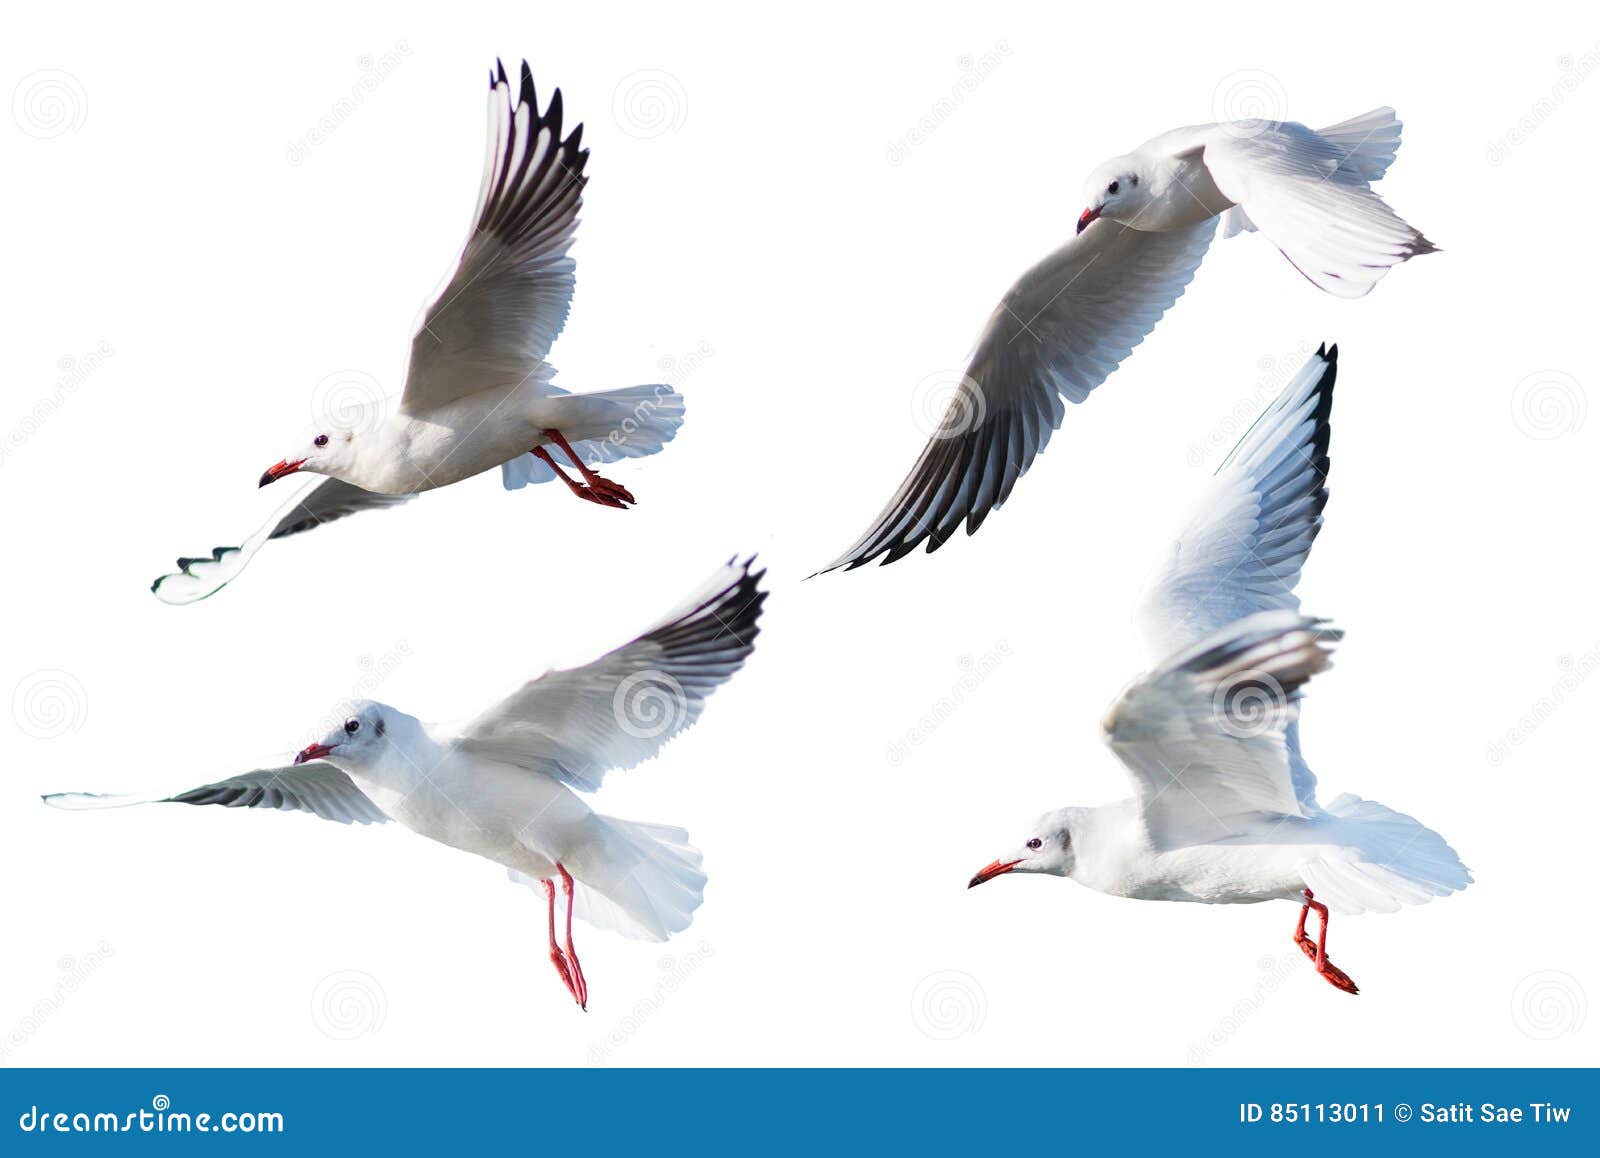 seagulls flying style  on white background.